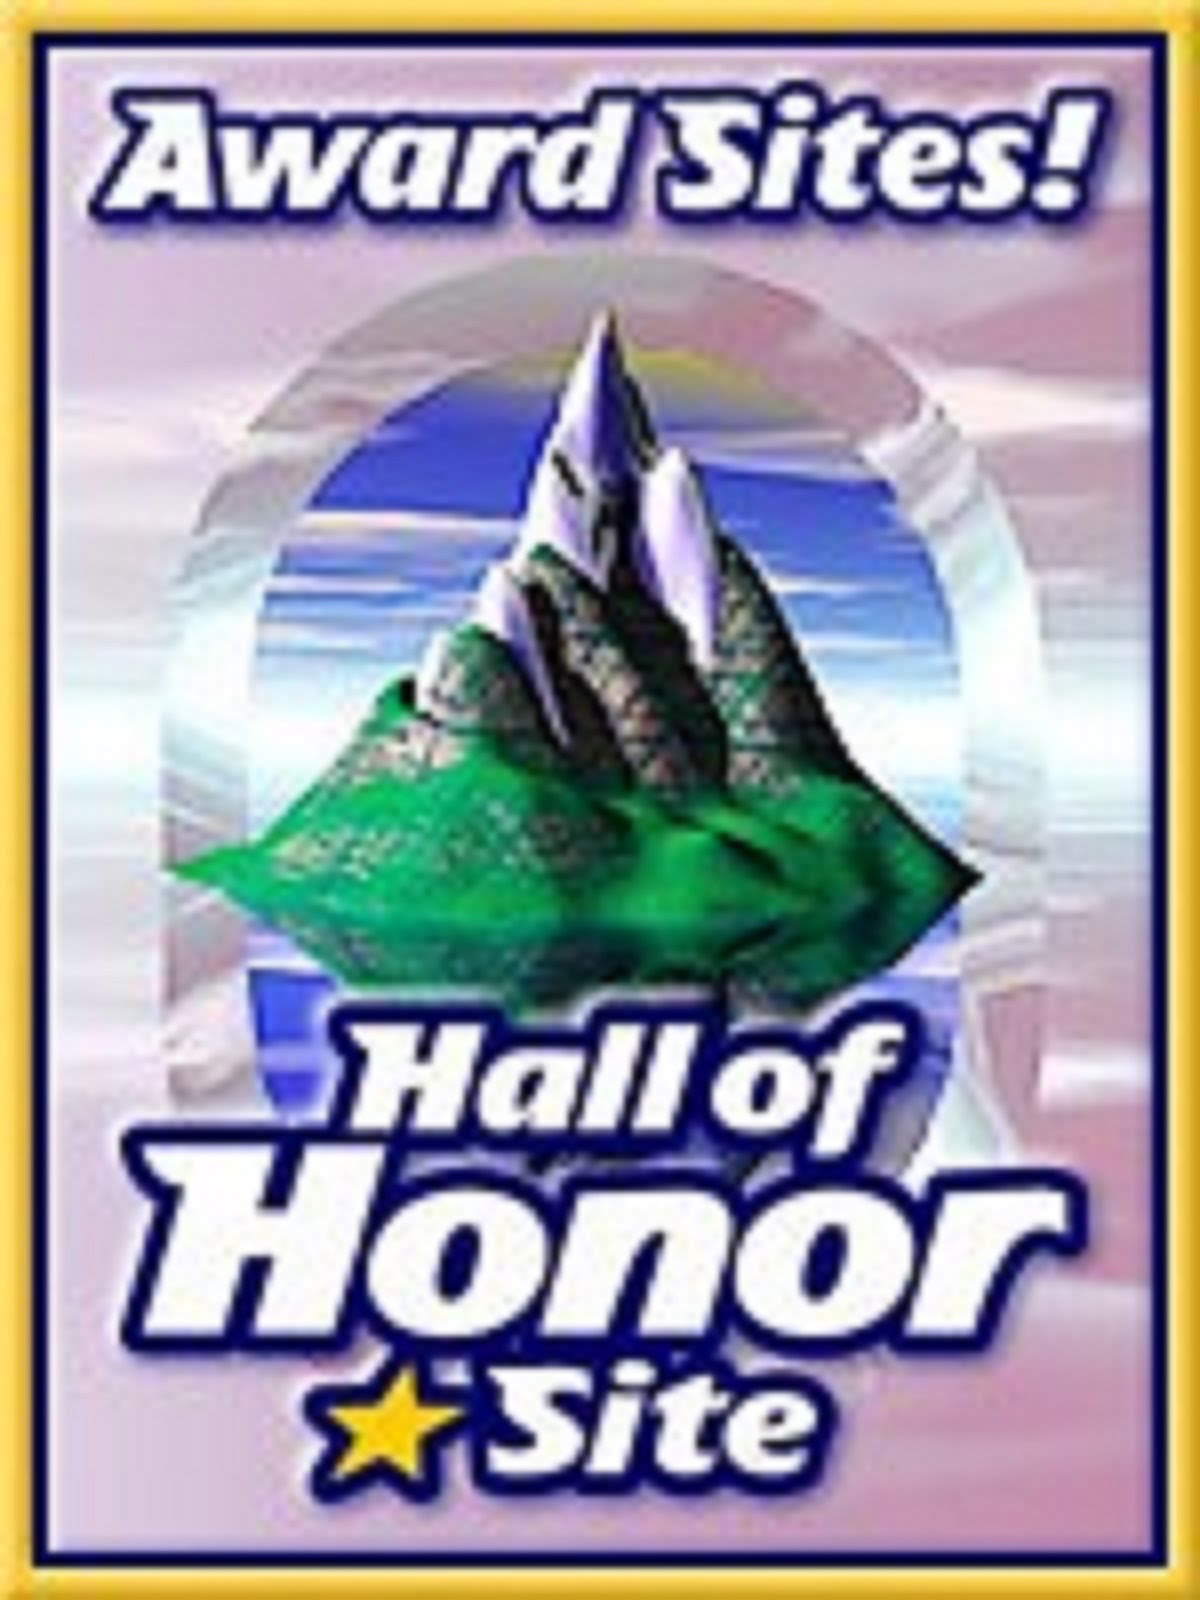 HALL OF HONOR AWARD STE